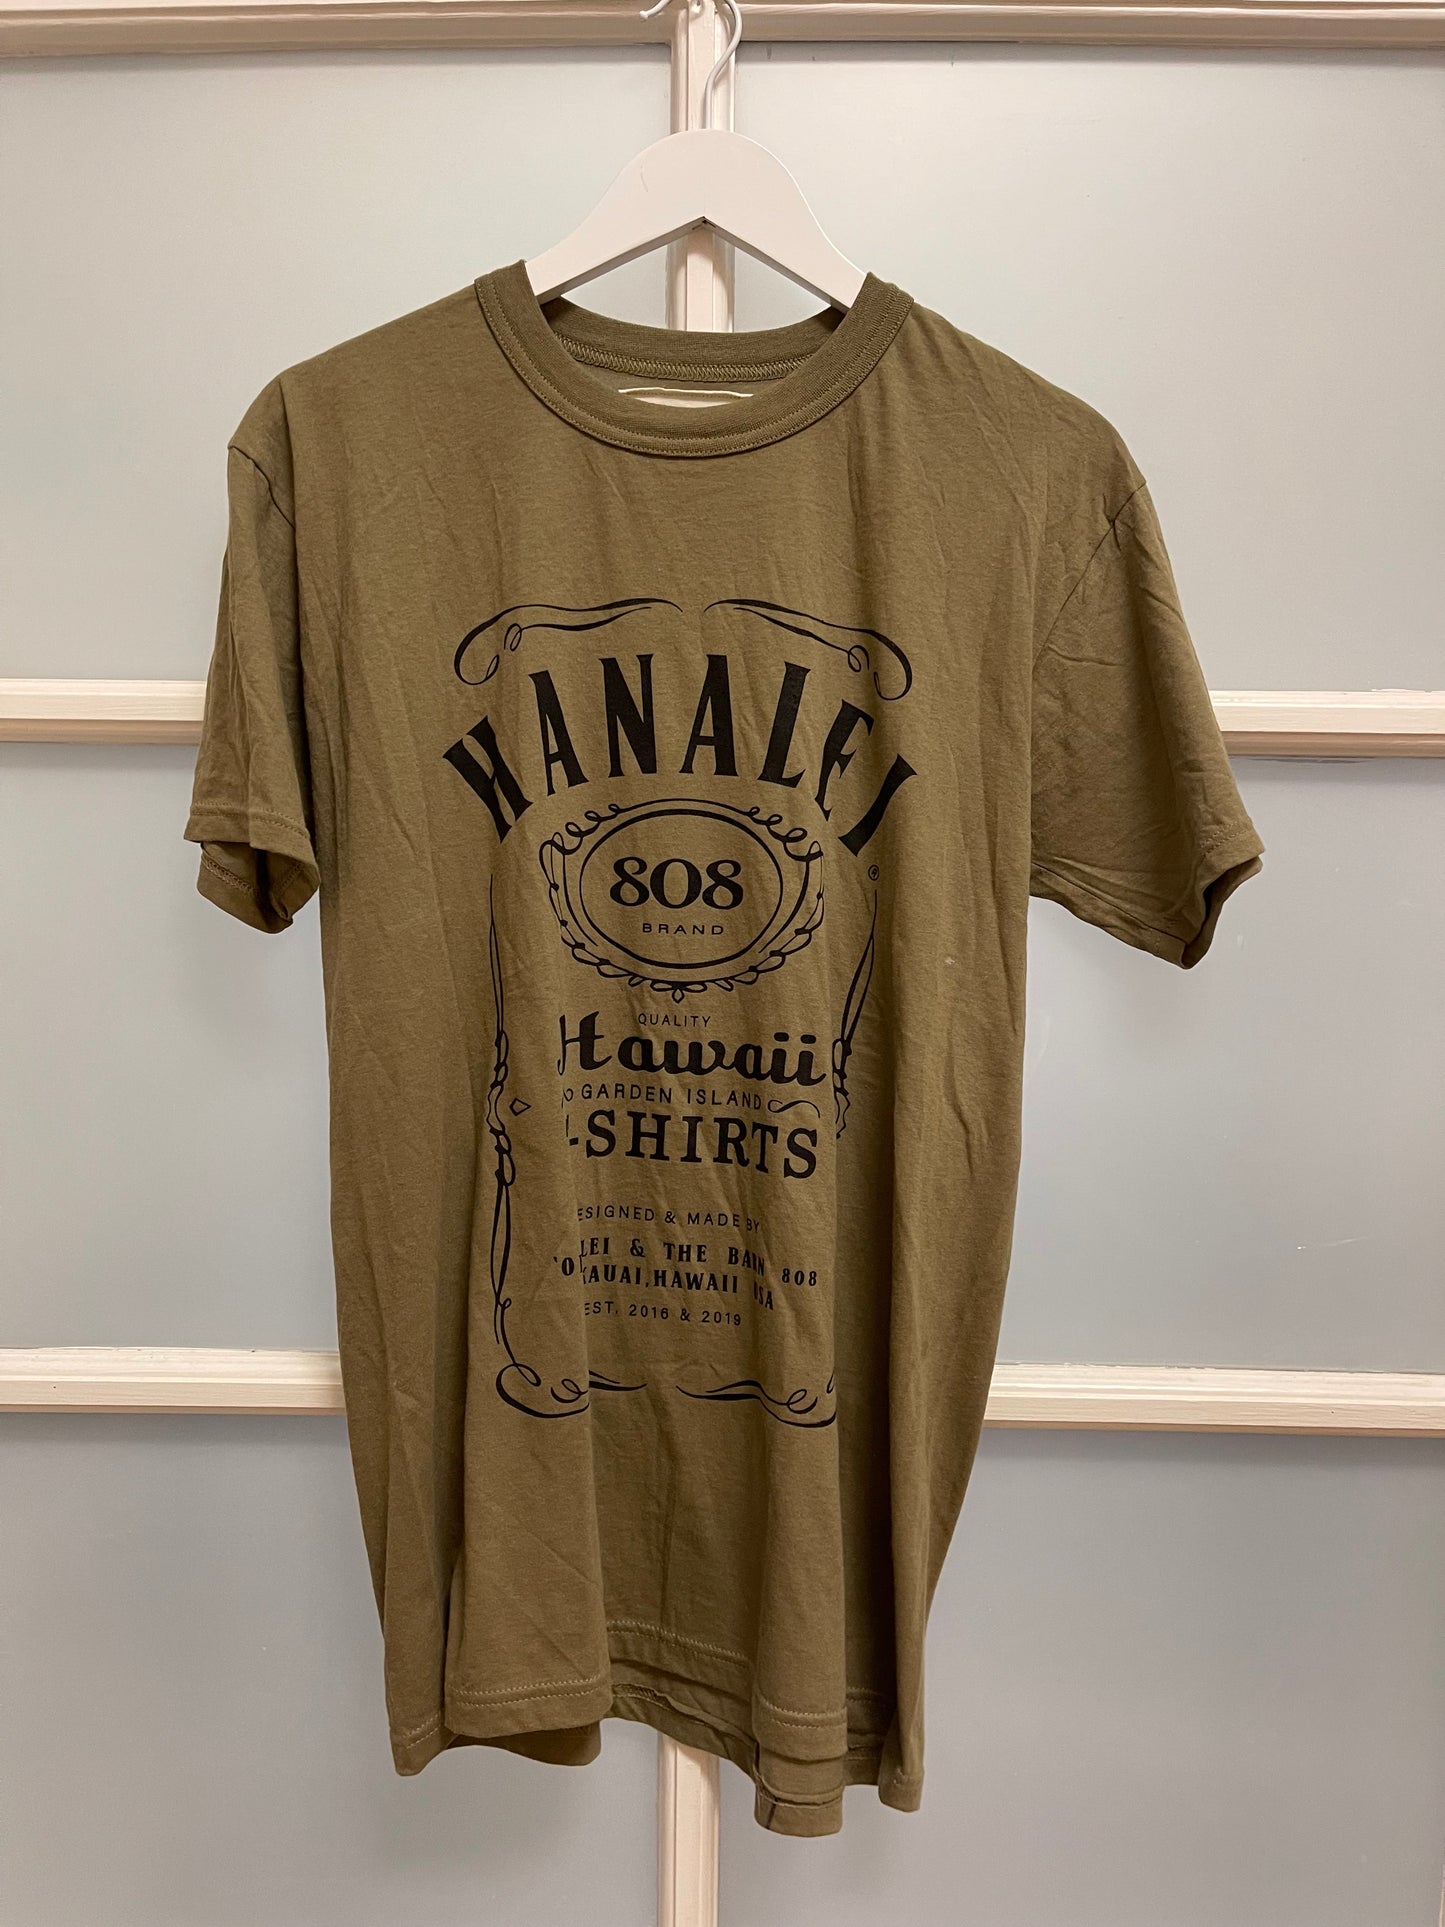 Ohanalei Vintage - Hanalei “808” Tee (Olive)